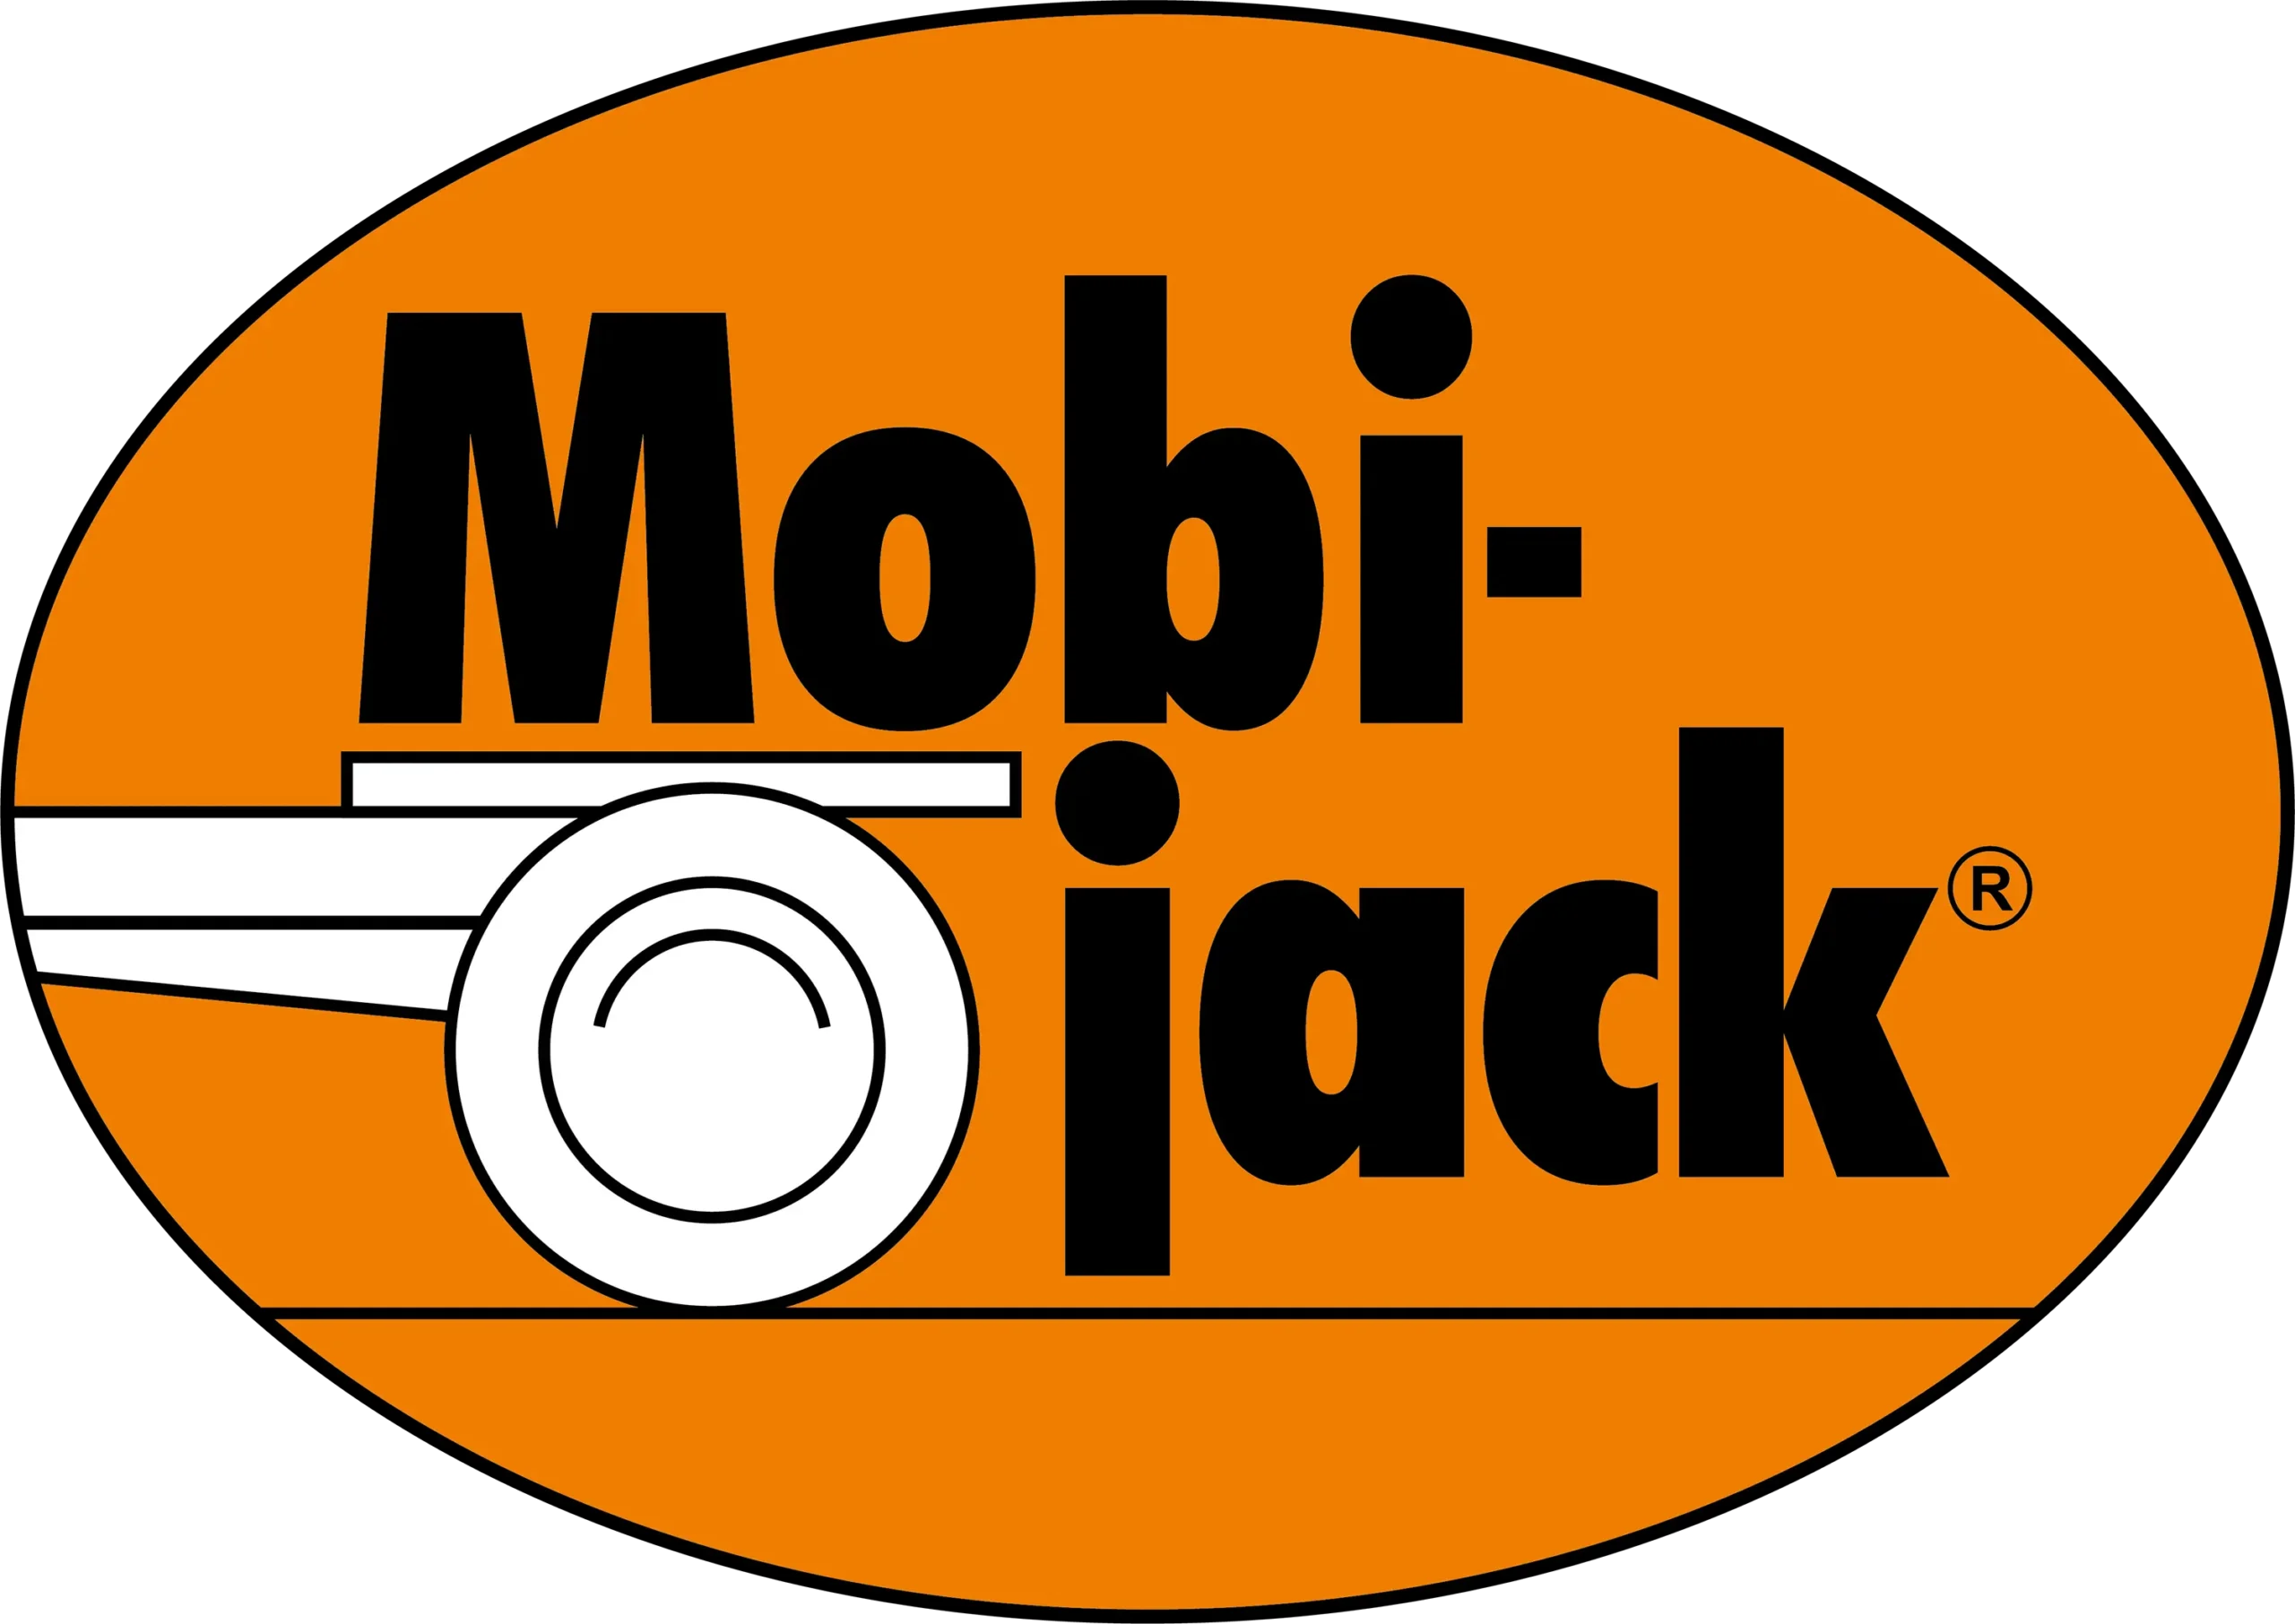 Mobi-Jack